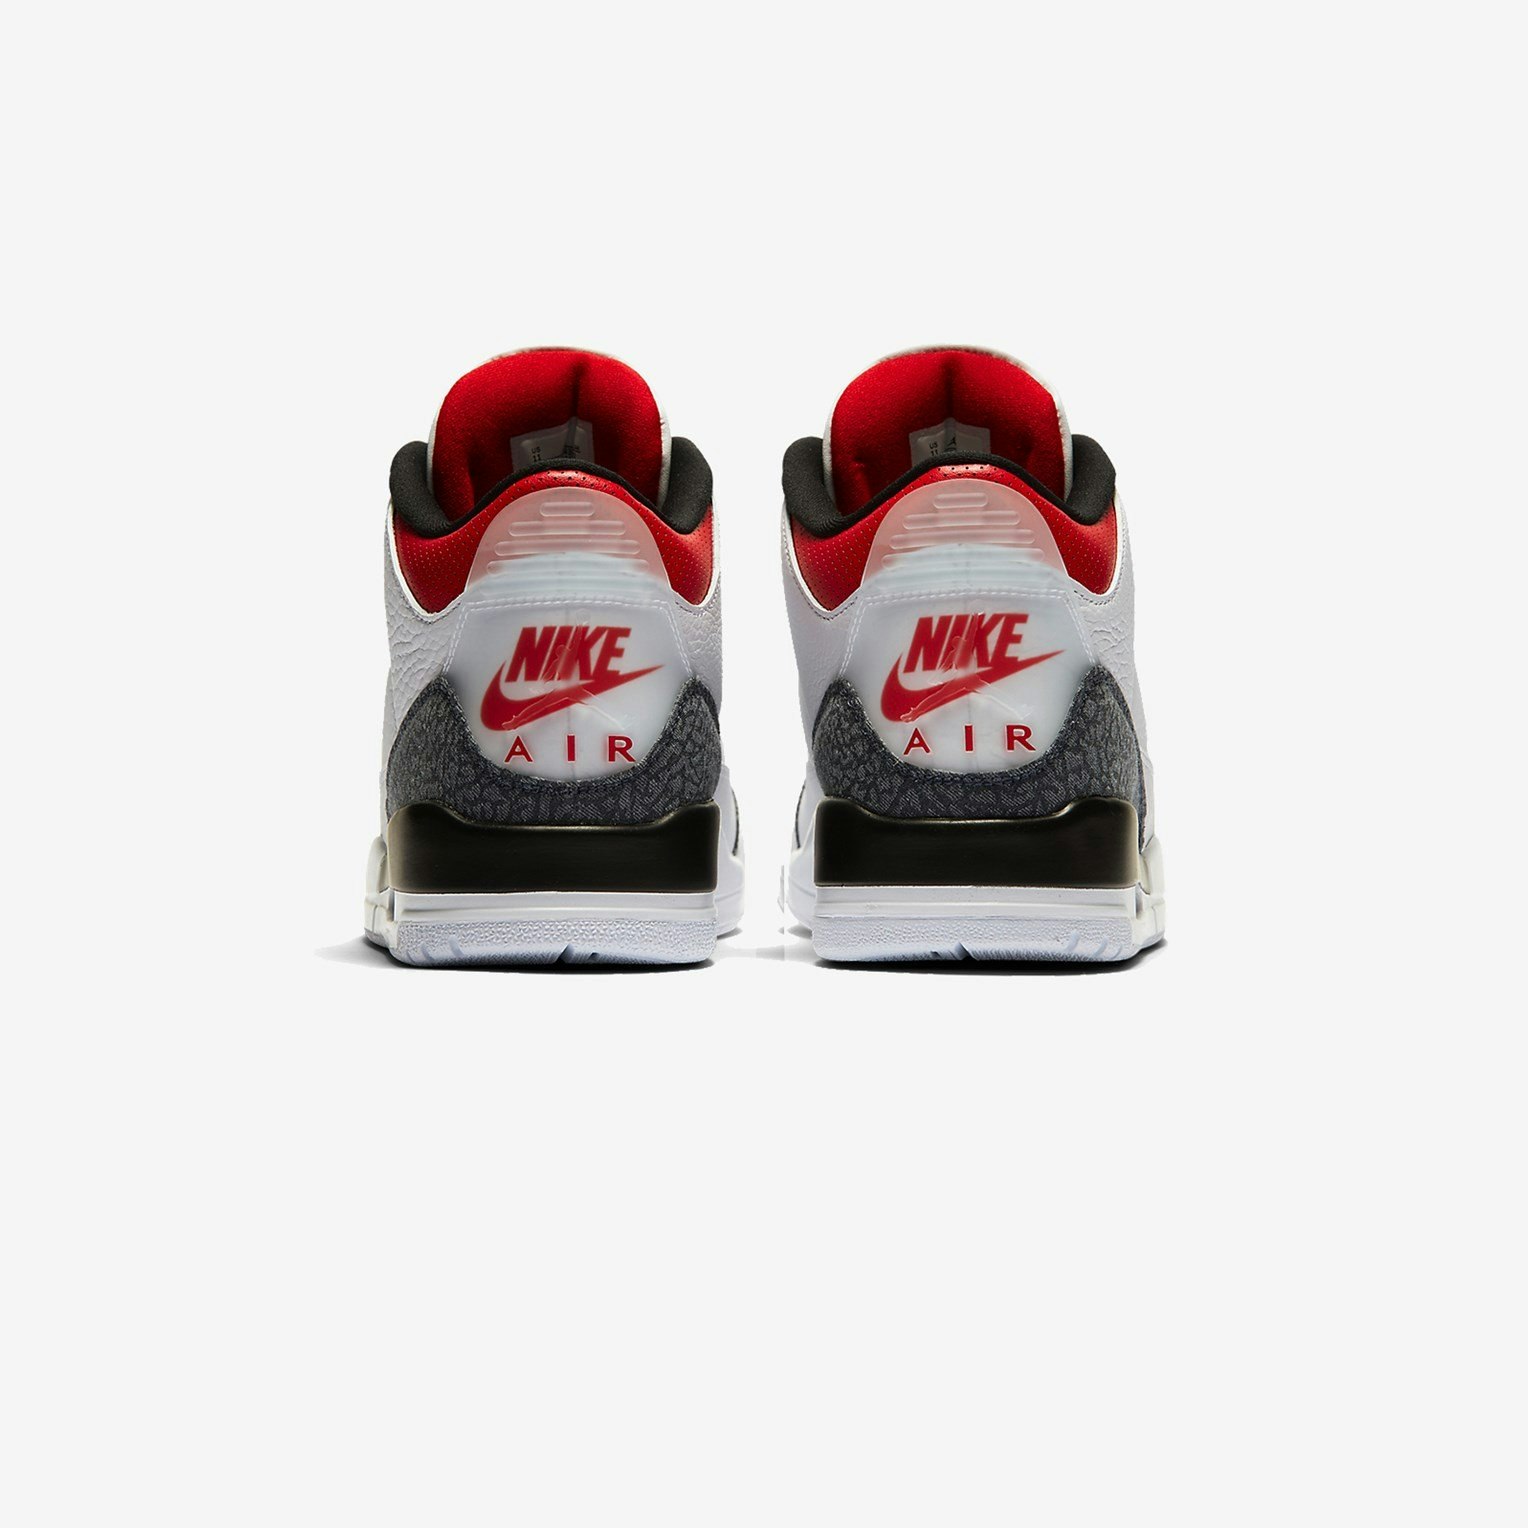 Air Jordan 3 Retro “Denim”